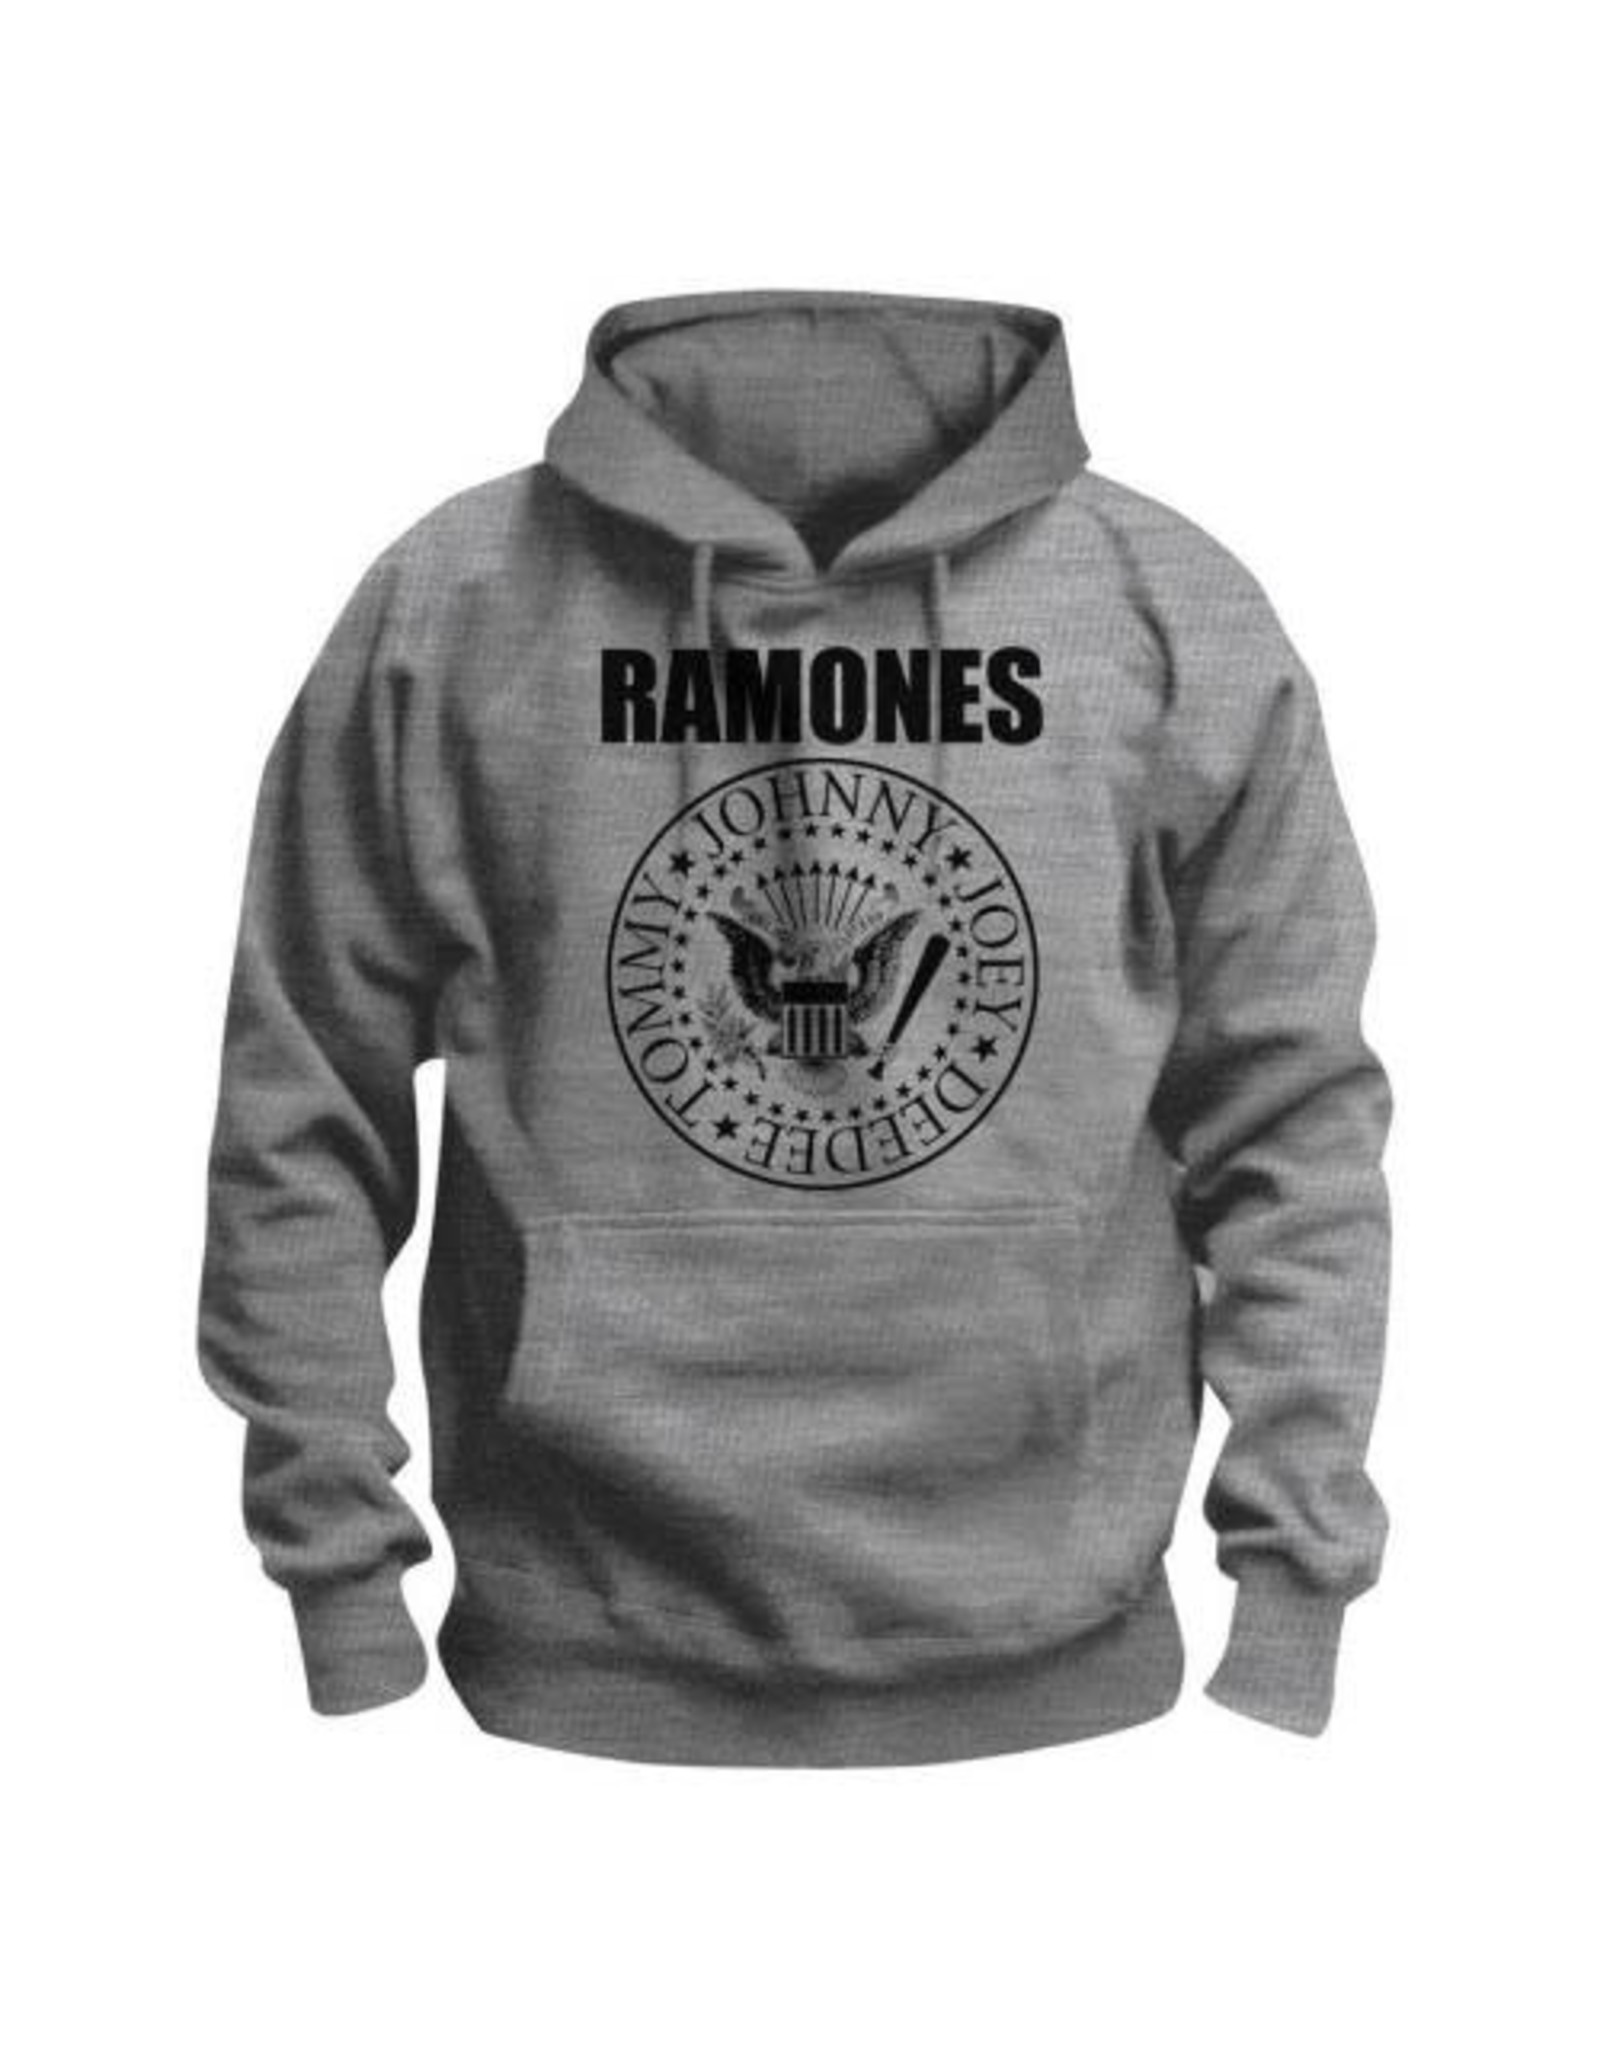 Ramones - Classic Logo Hooded Pullover Sweater - Pop Music